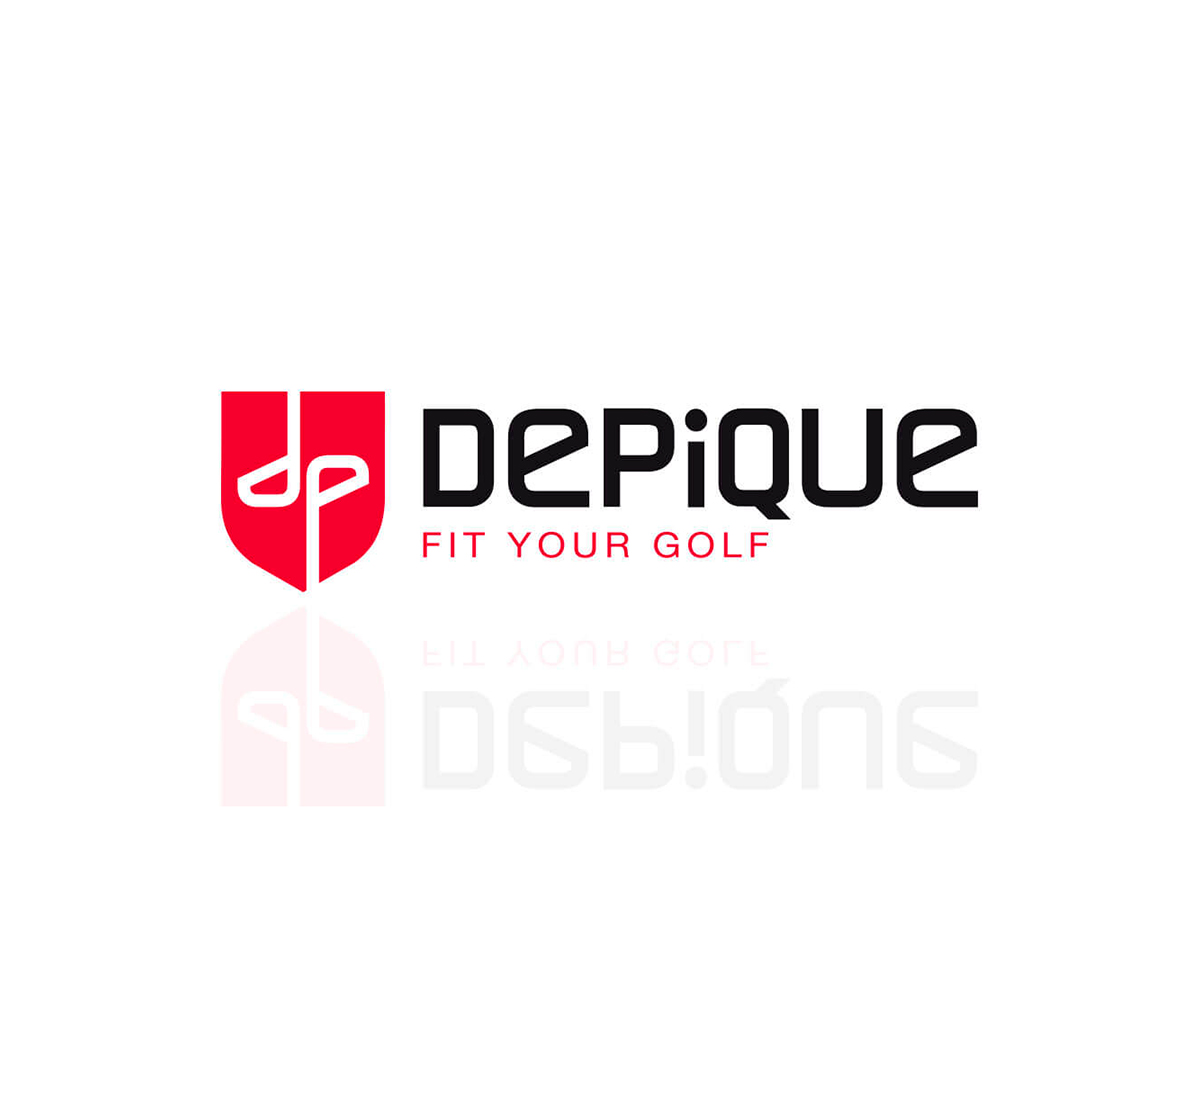 Depique branding | Designed by MutuoEstudio